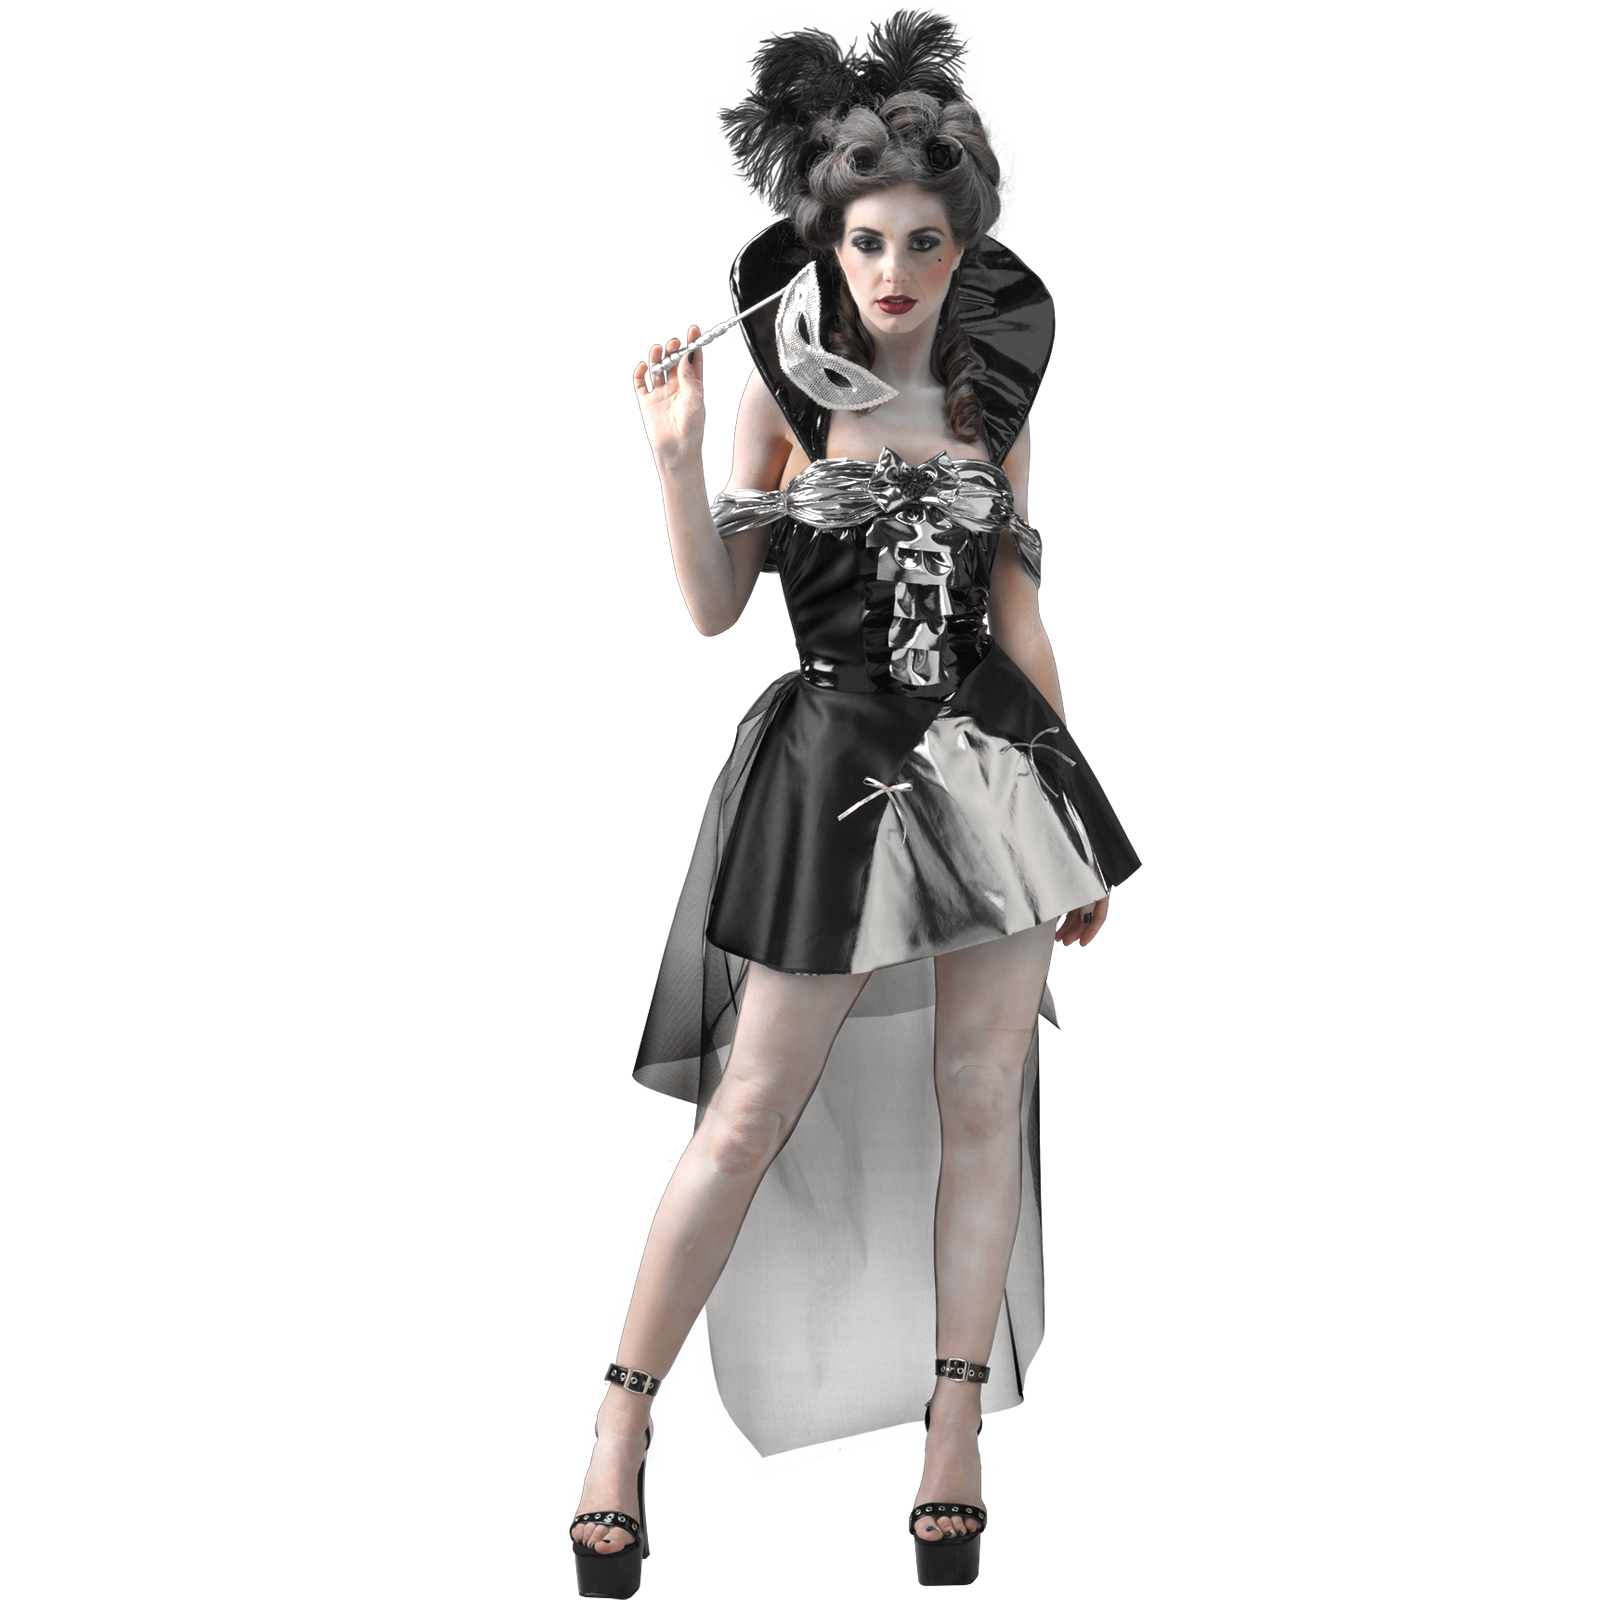 masquerade princess costume ideas? | Yahoo Answers